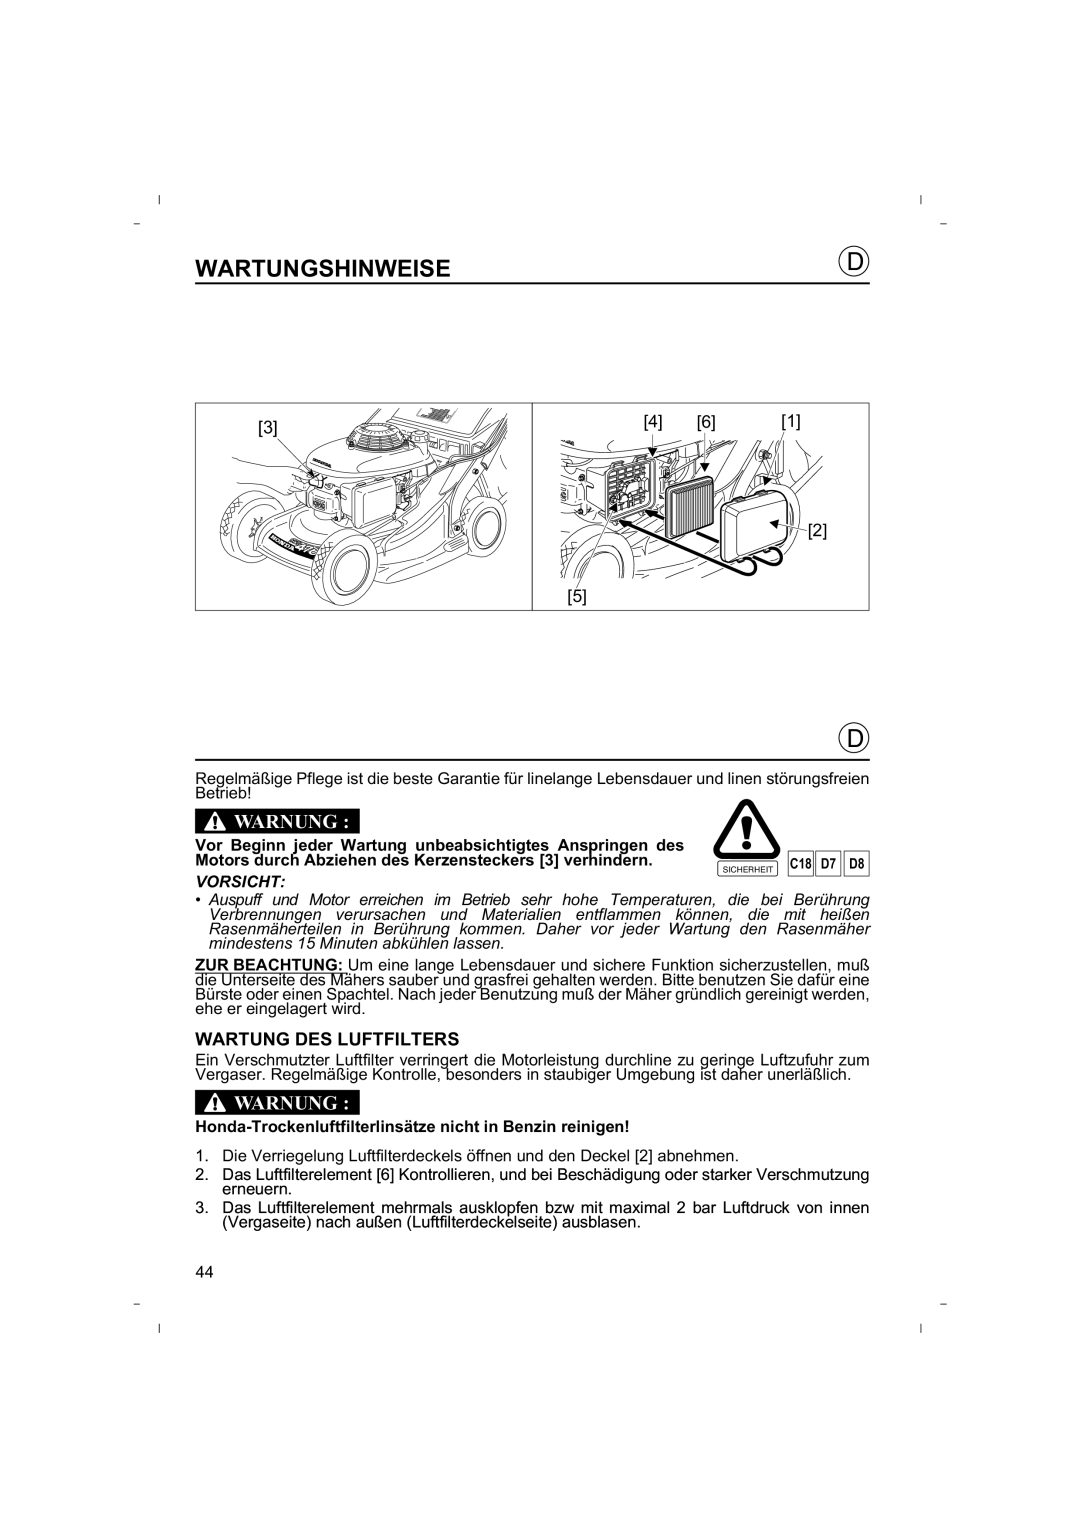 Honda Power Equipment HRB425C owner manual Wartungshinweise, Warnung, Wartung Des Luftfilters 